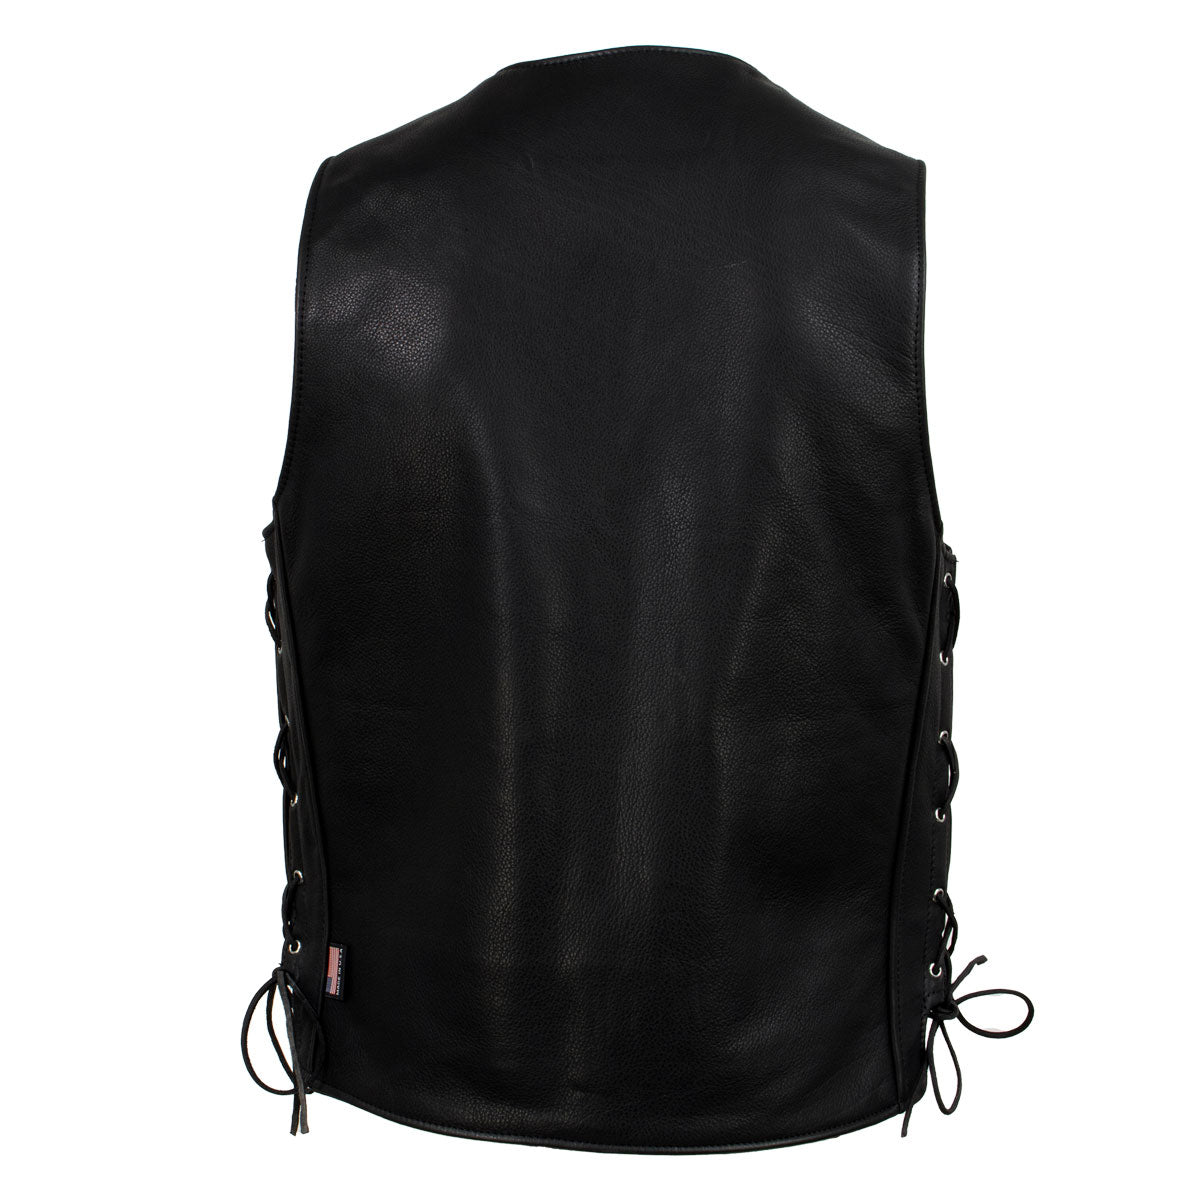 Hot Leathers VSM5003 USA Made Men's 'Gaucho' Black Extra Long Back Premium Steerhide Leather Vest